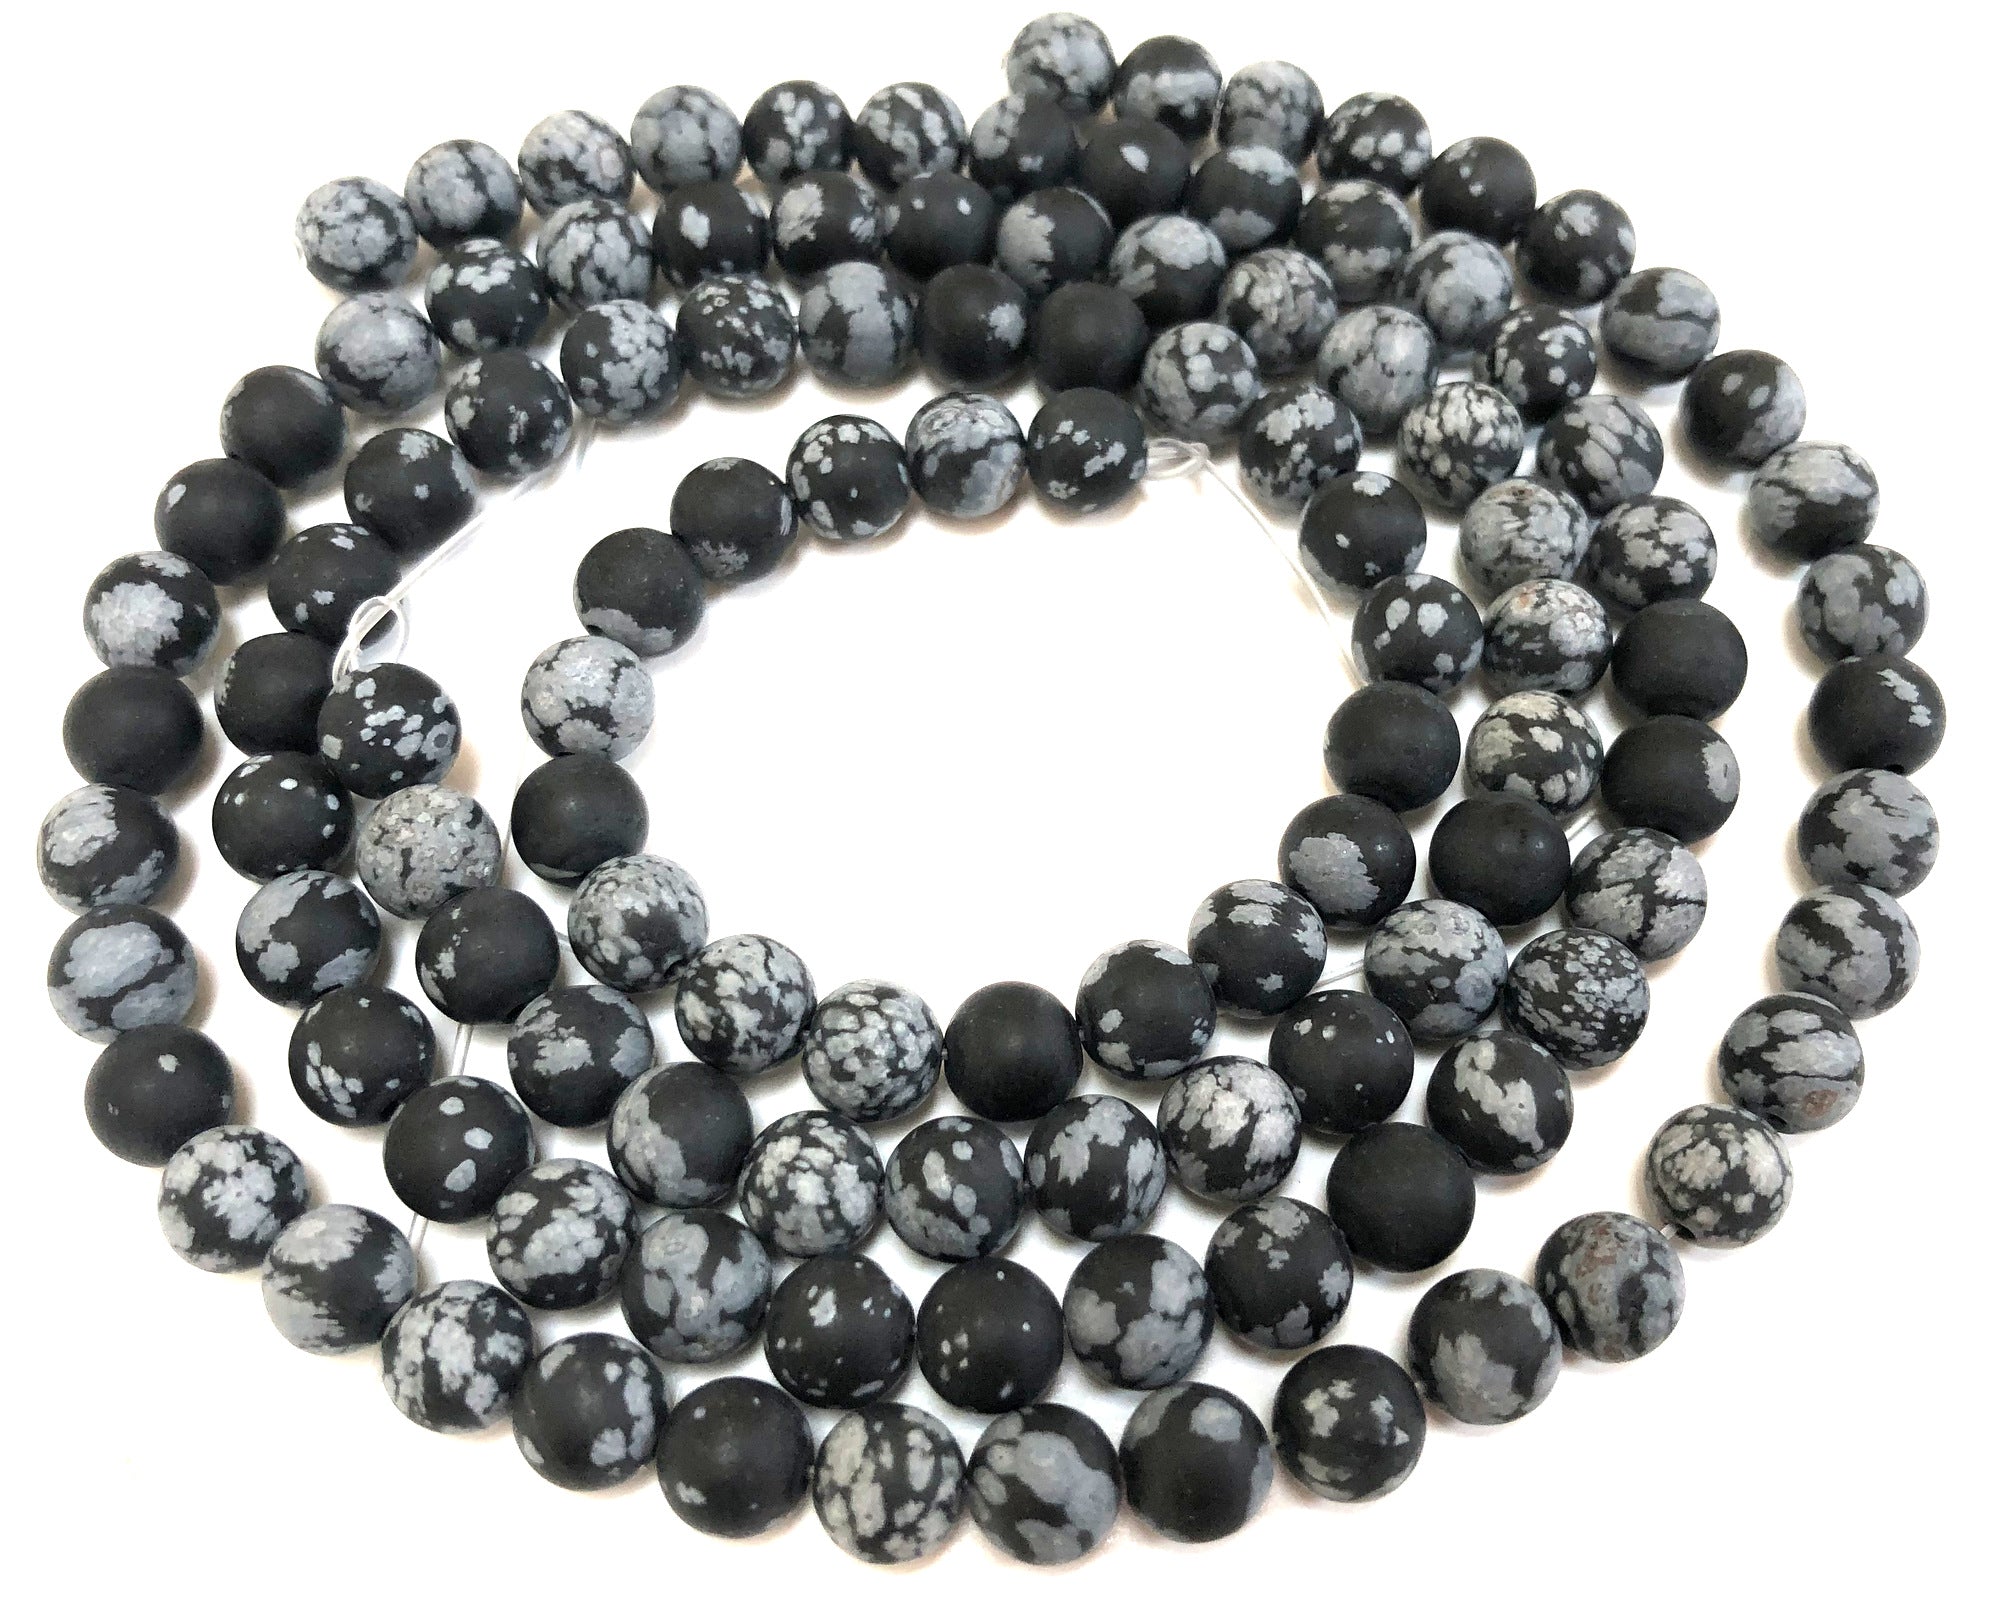 Snowflake Obsidian matte 6mm 8mm round gemstone beads 15" strand - Oz Beads 